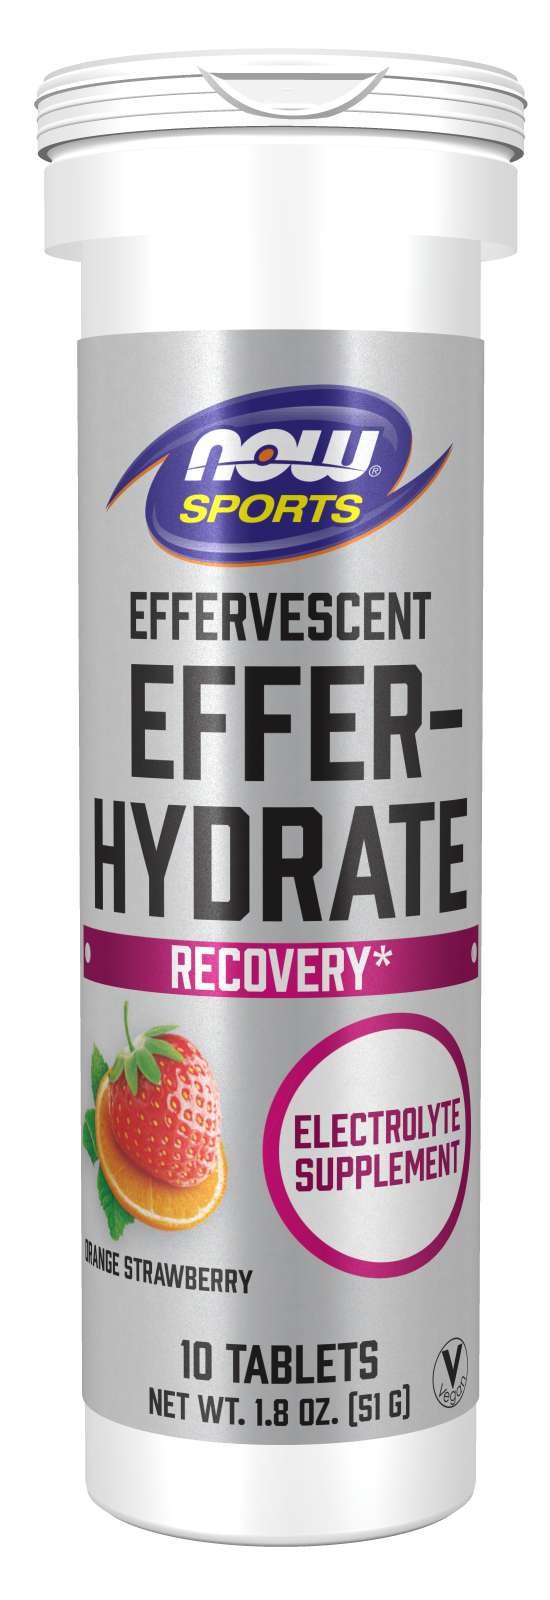 Effer-Hydrate Effervescent Orange Strawberry - 10 Tablets/Tube Front